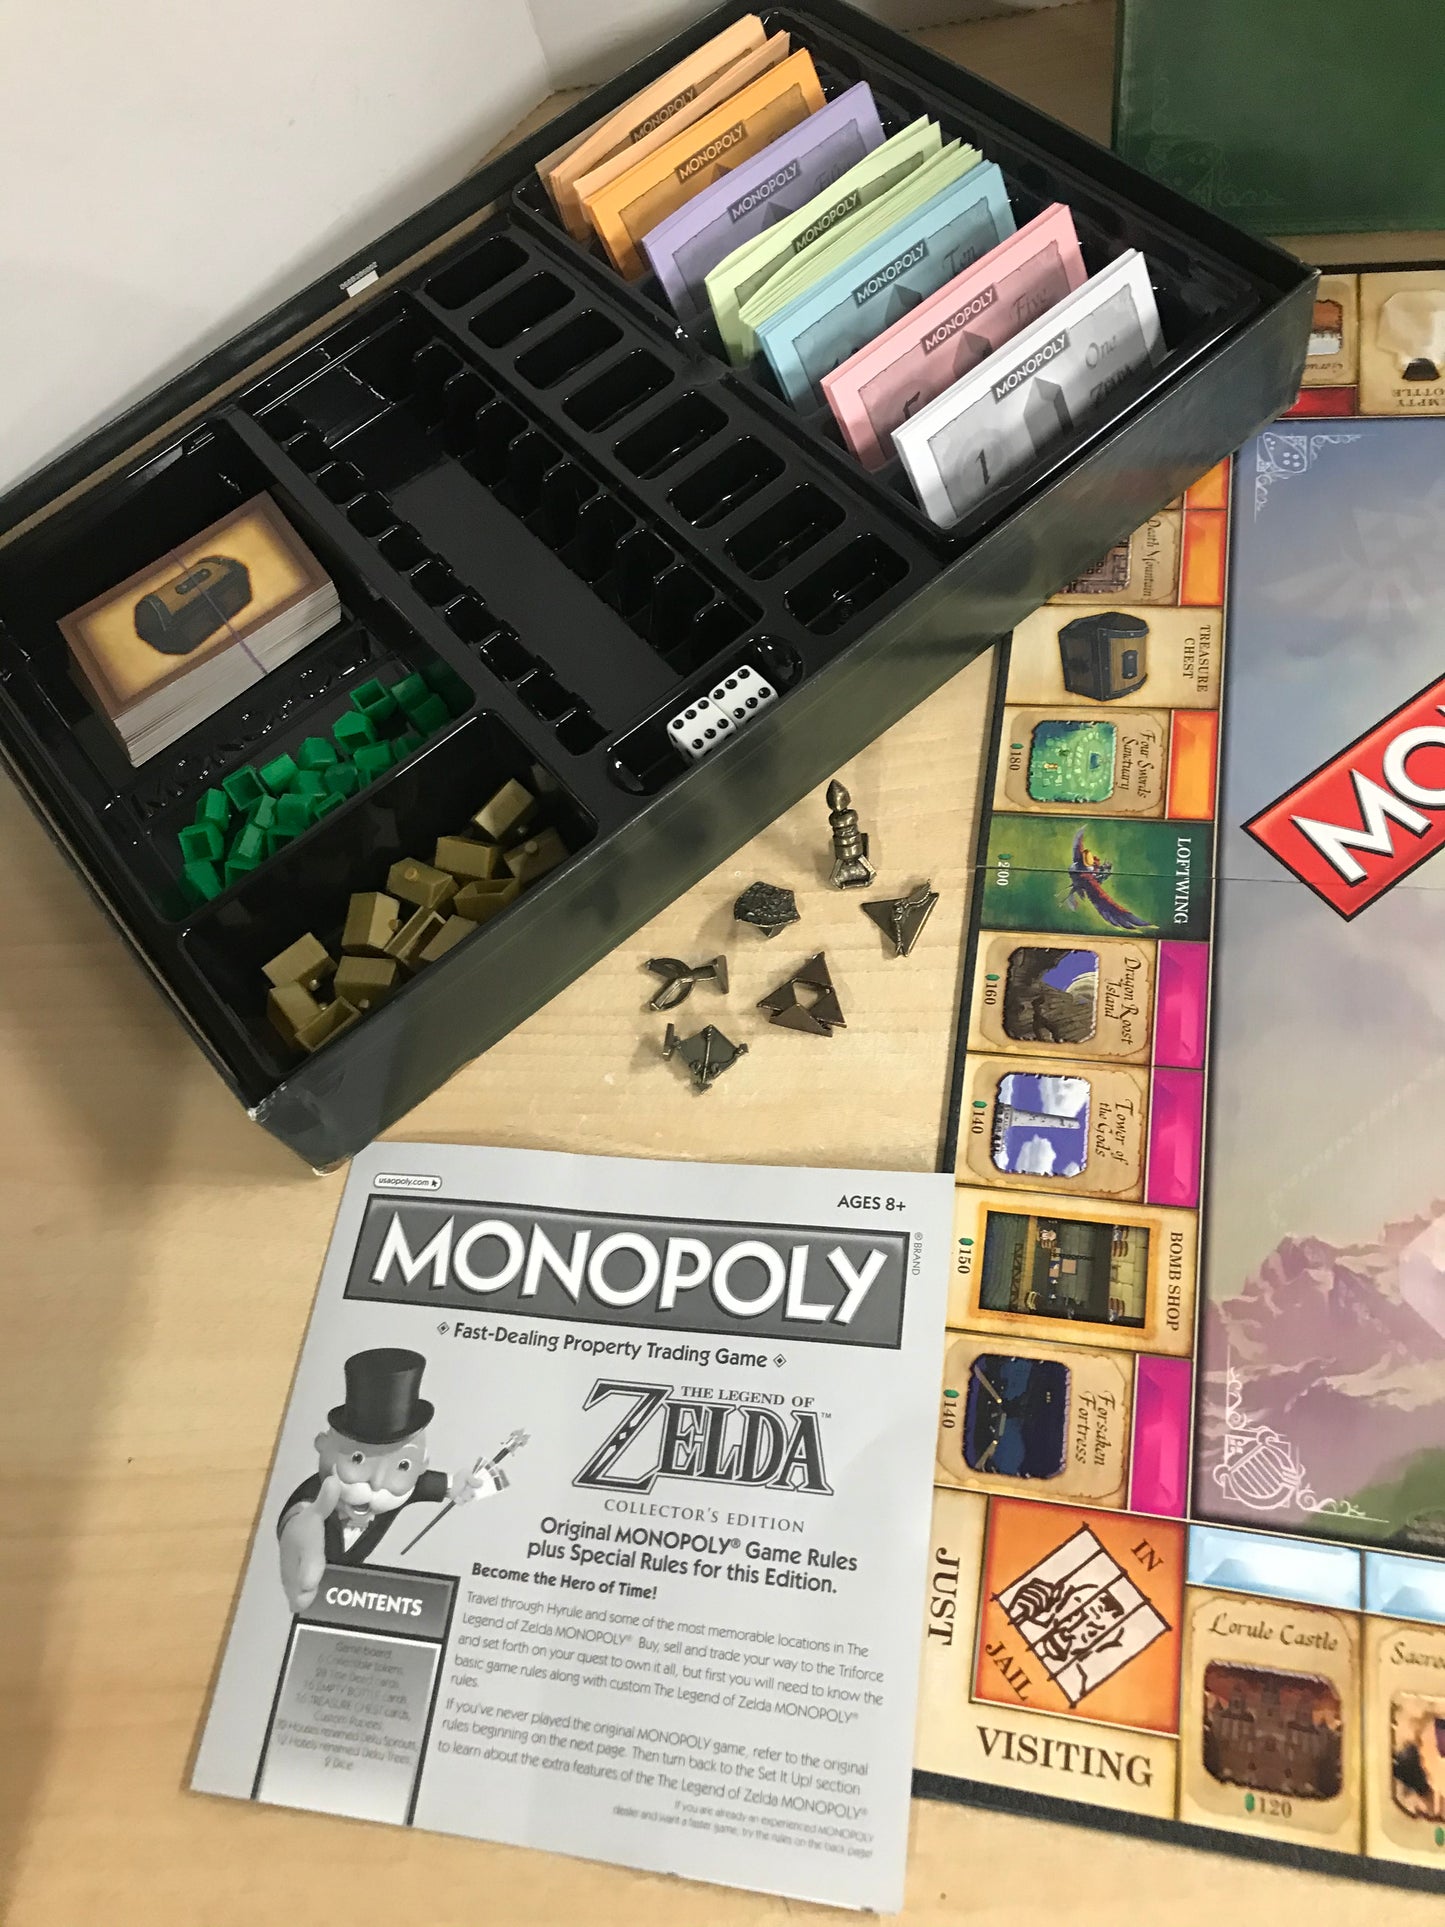 Game Monopoly Legend of Zelda Collectors Edition Complete Excellent